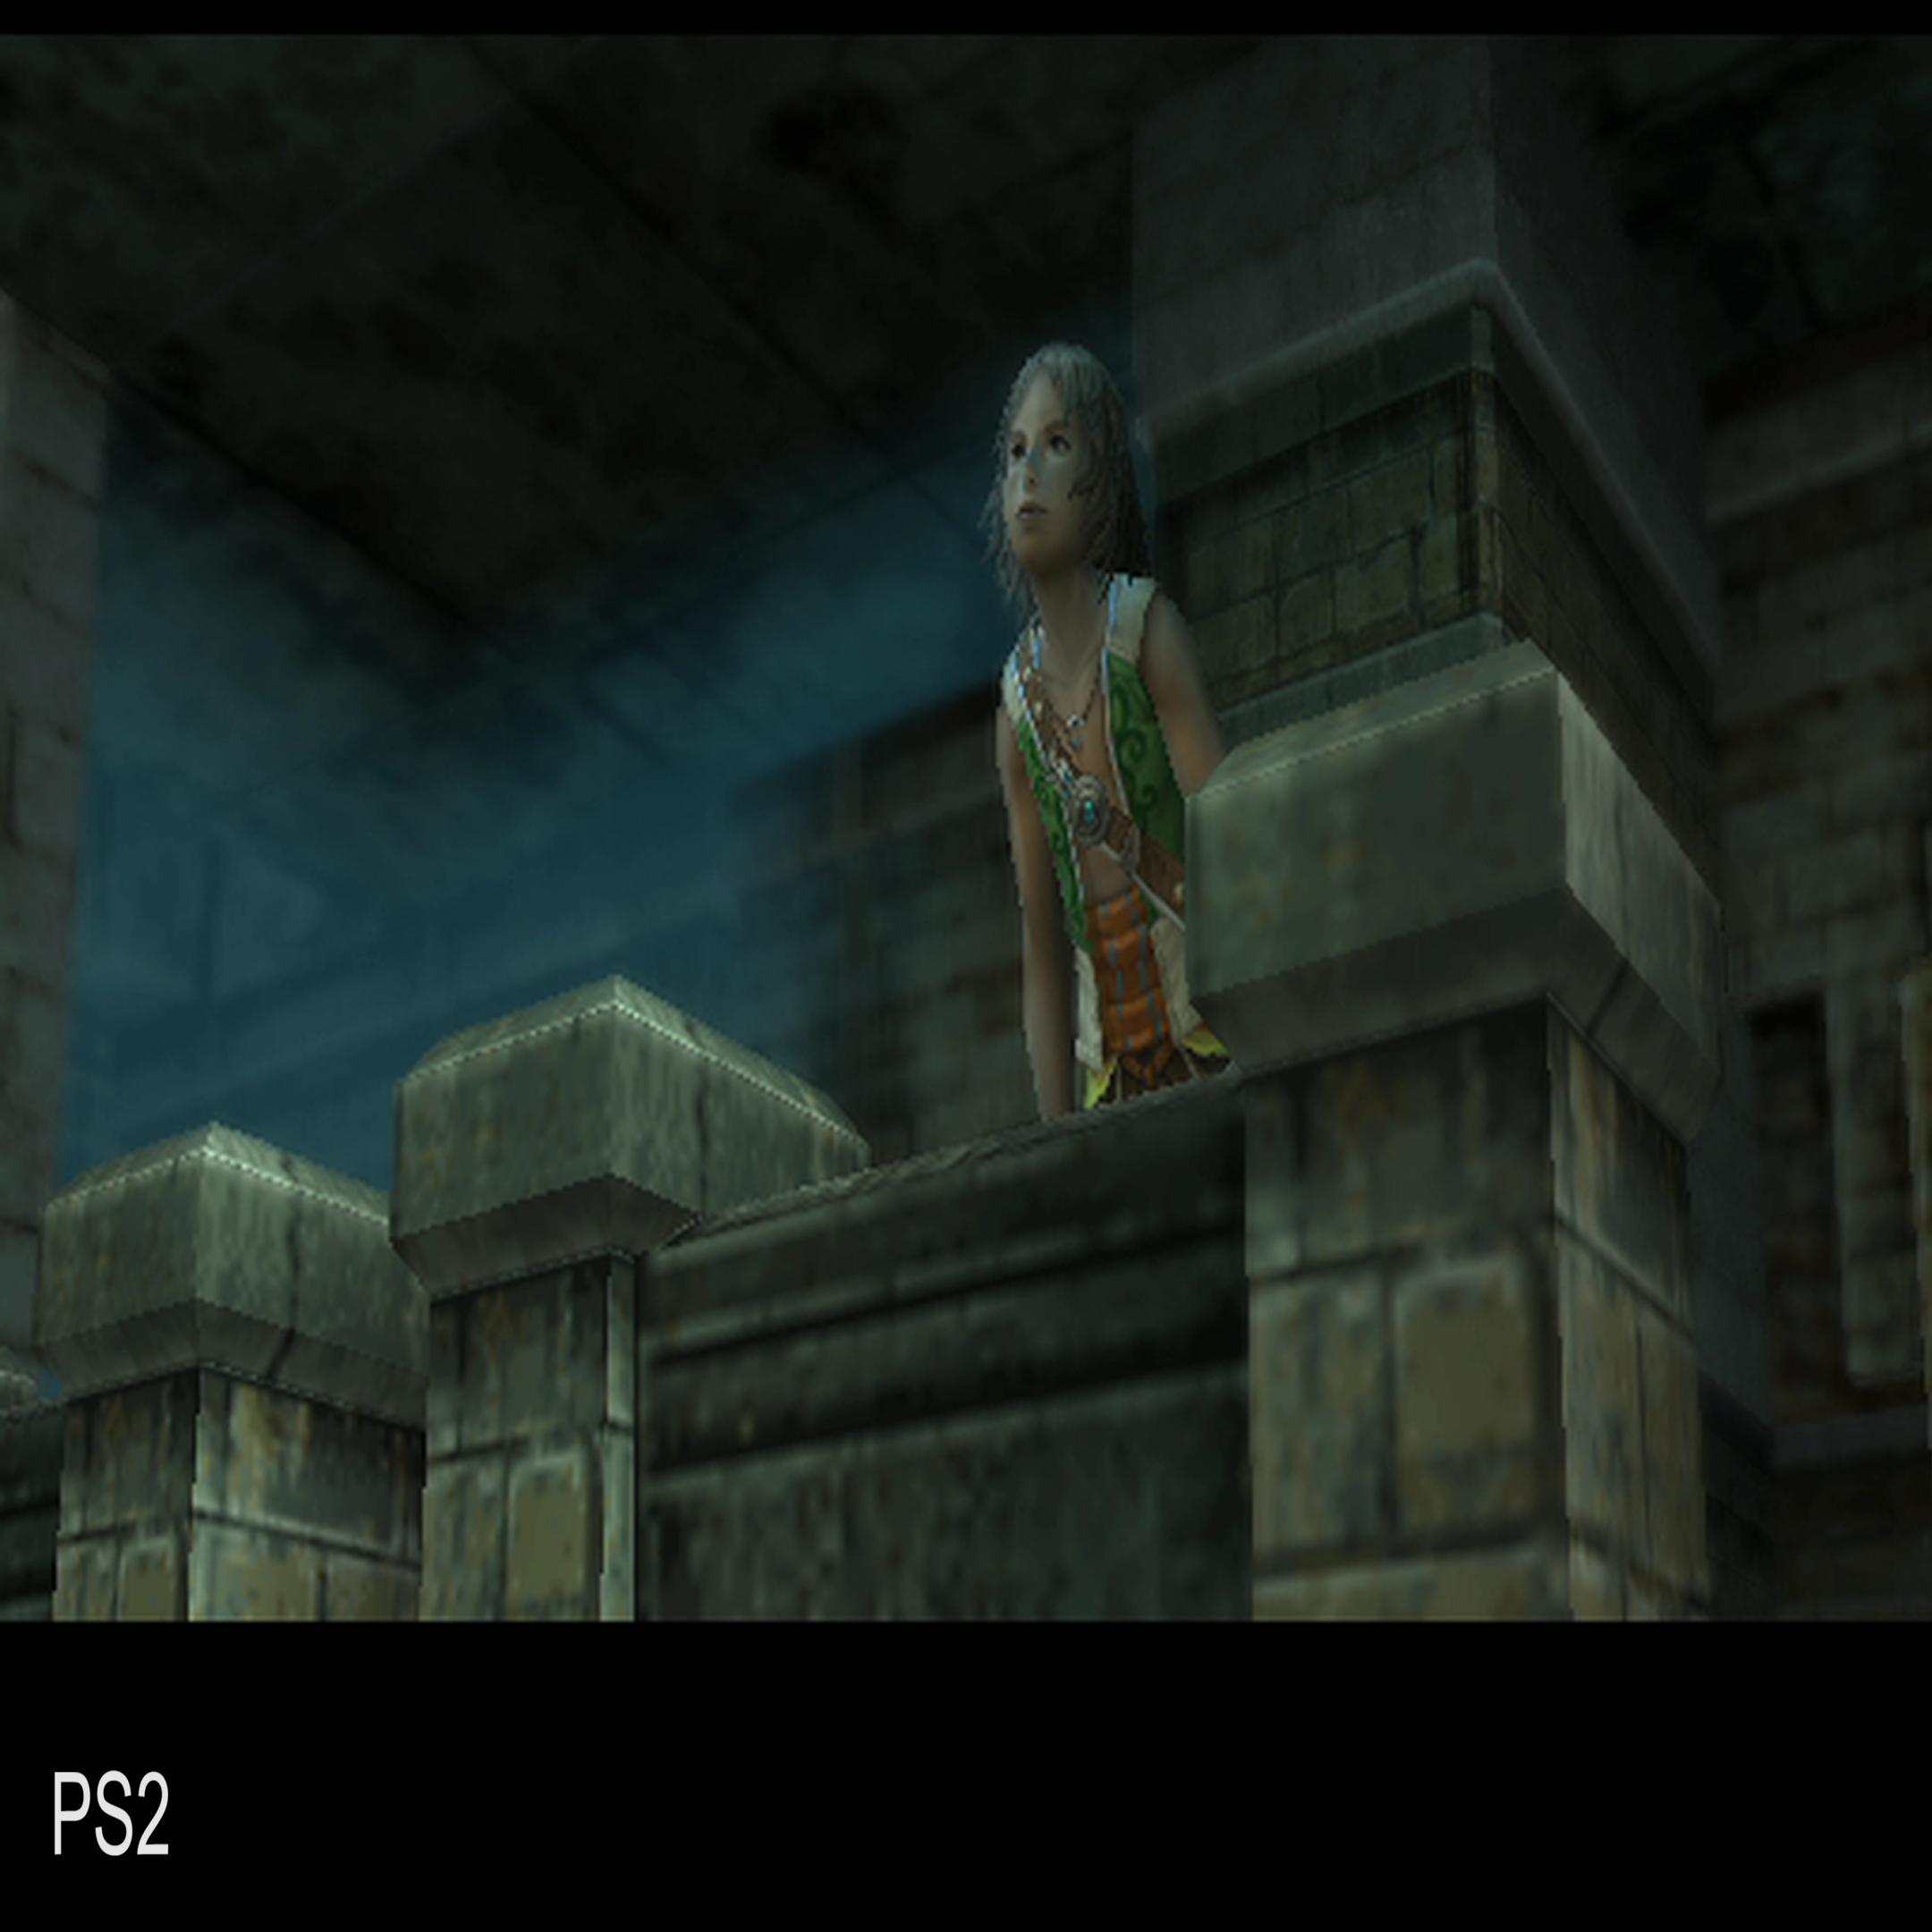 Final Fantasy XII PS2 Gameplay HD (PCSX2) 